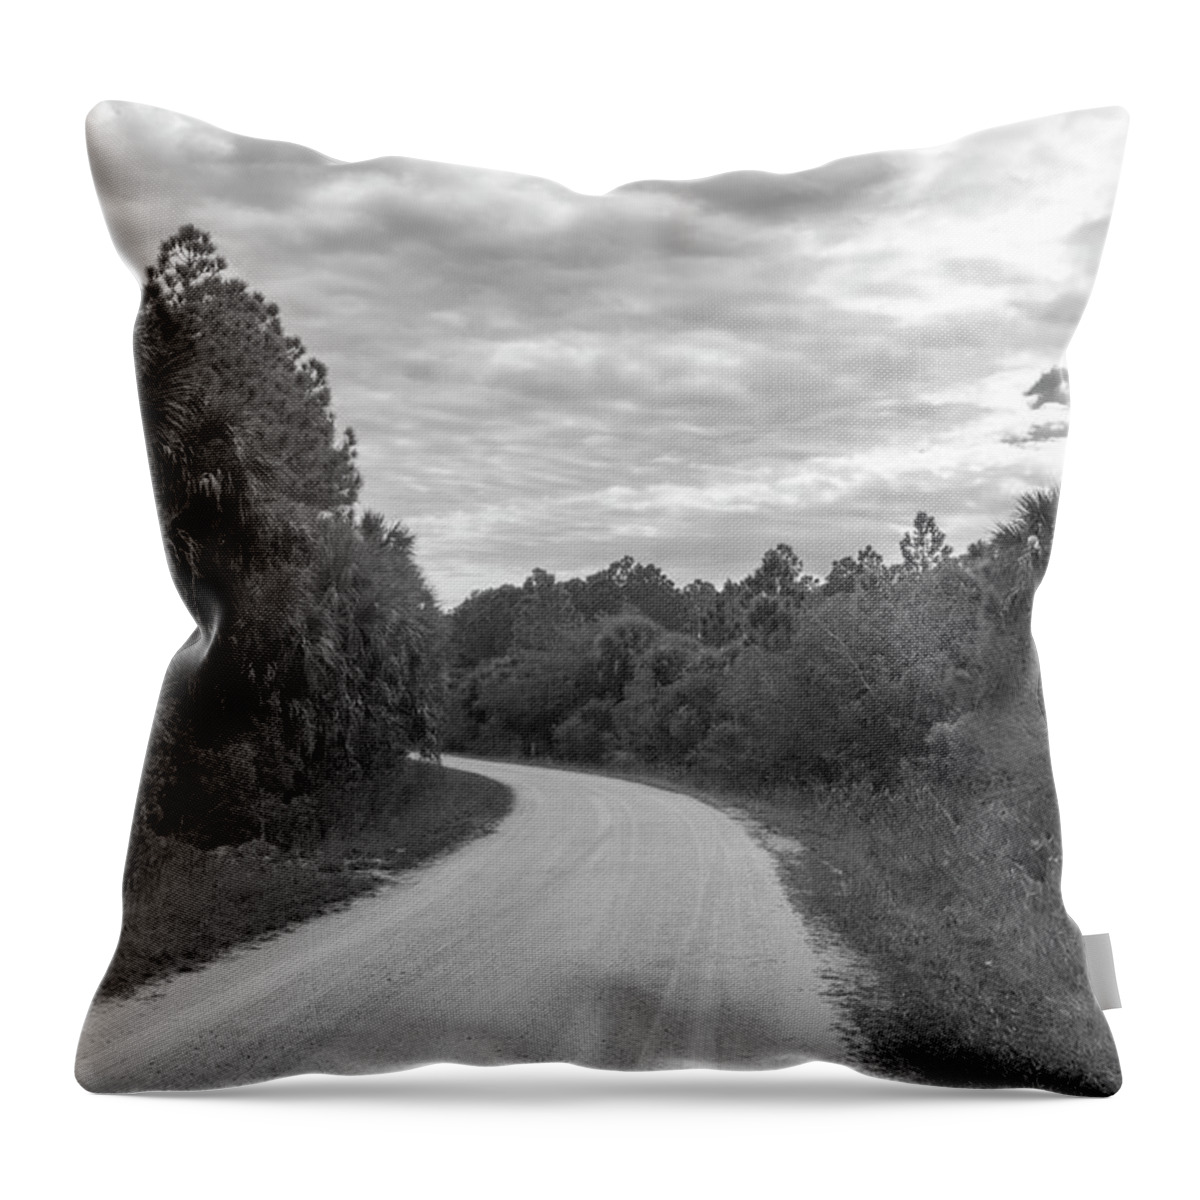 Florida Throw Pillow featuring the photograph Adventure Awaits Around the Bend by Robert Wilder Jr